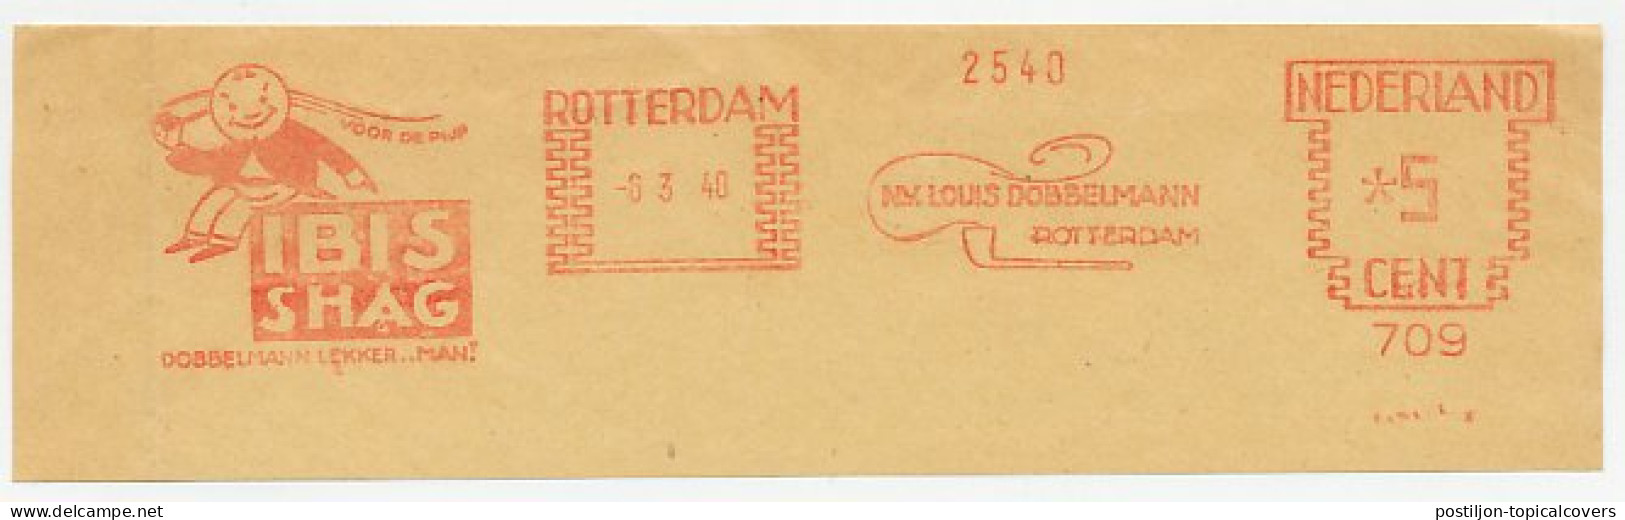 Meter Cut Netherlands 1940 Ibis Shag - Tobacco - Pipe Smoking - Tabaco